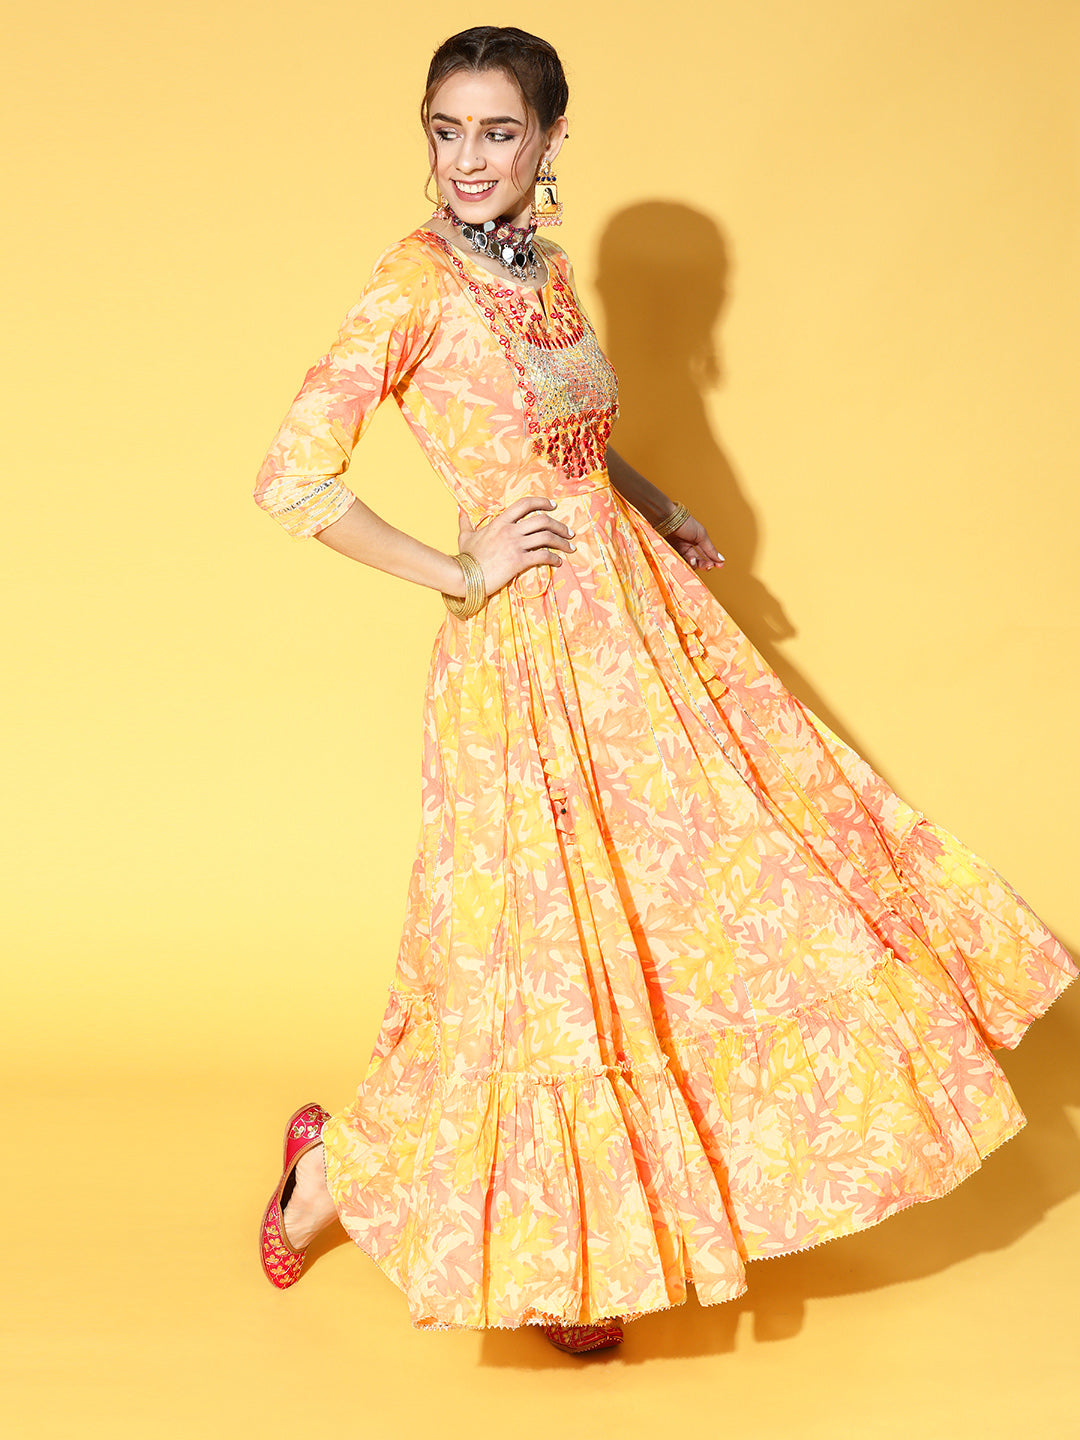 Ishin Women's Cotton Blend Yellow Embroidered Anarkali Kurta